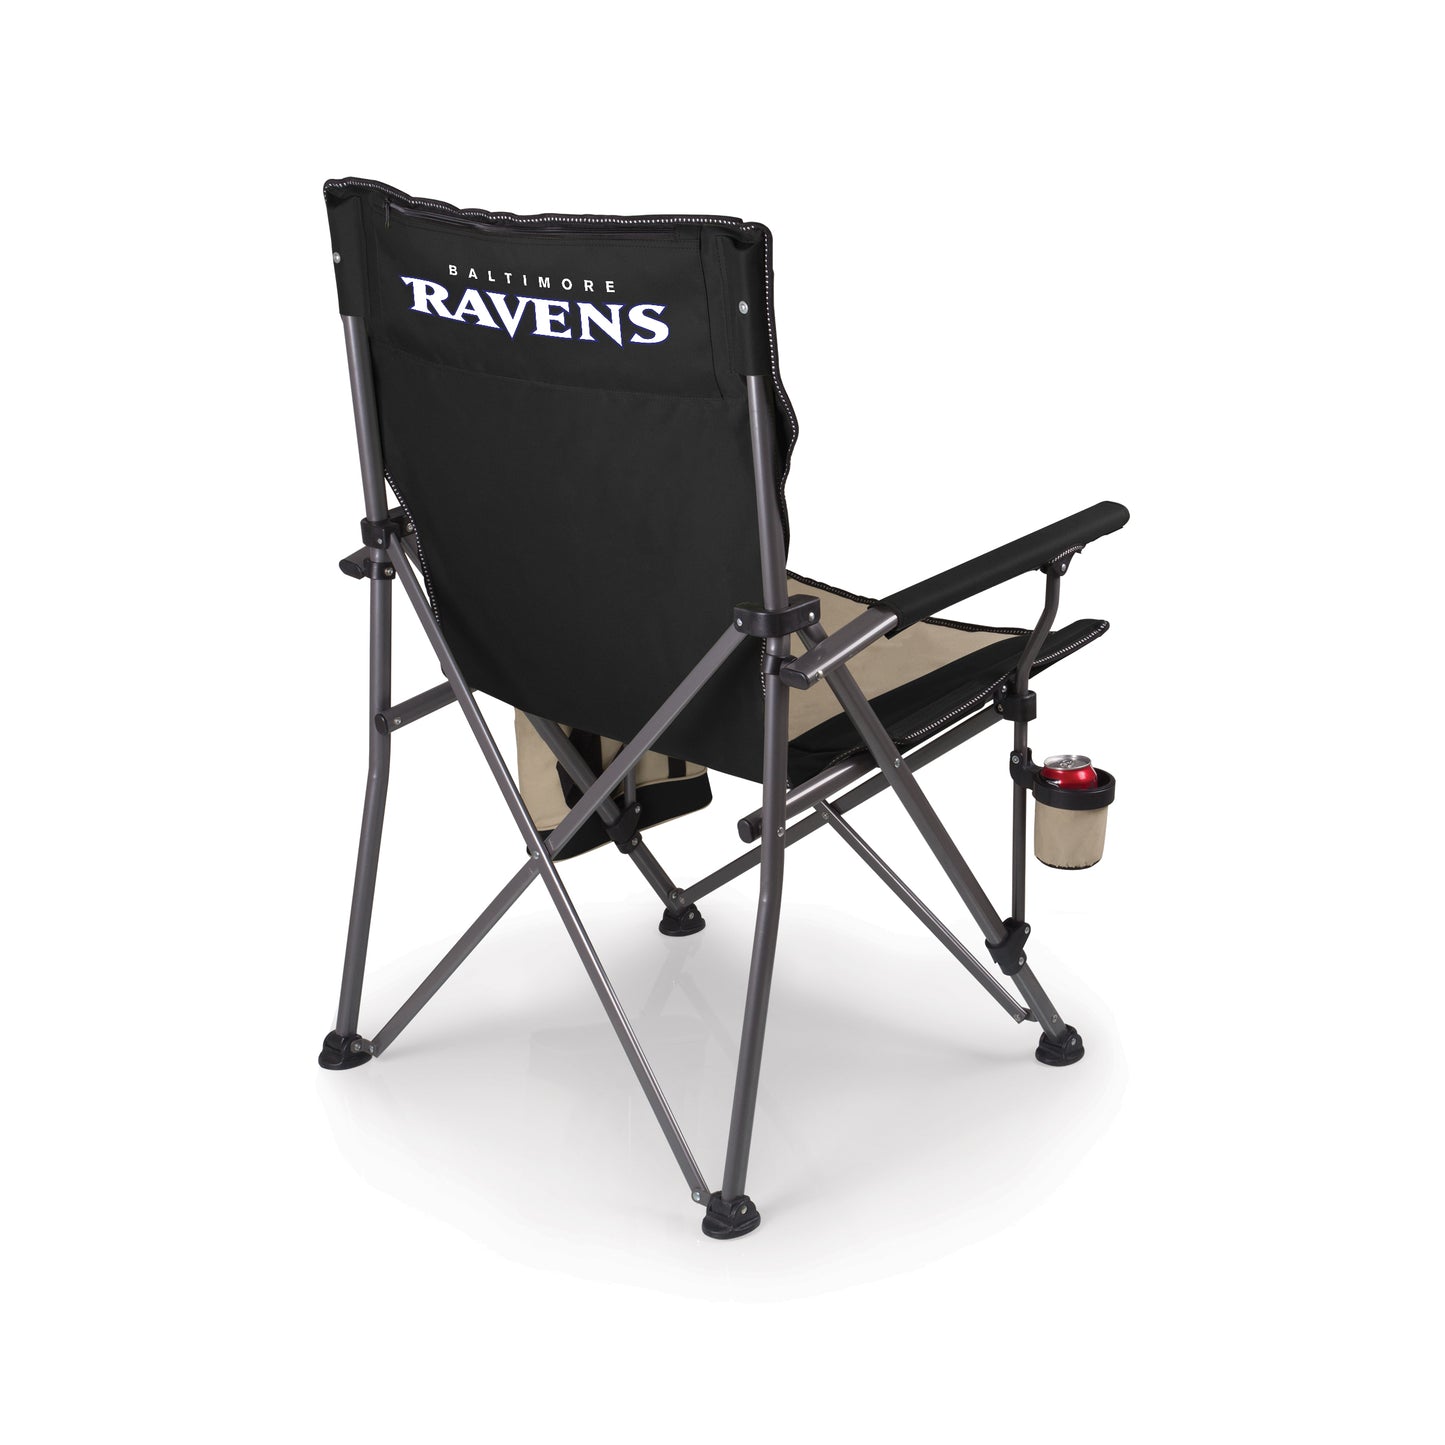 Baltimore Ravens - Big Bear XL Camp Chair with Cooler